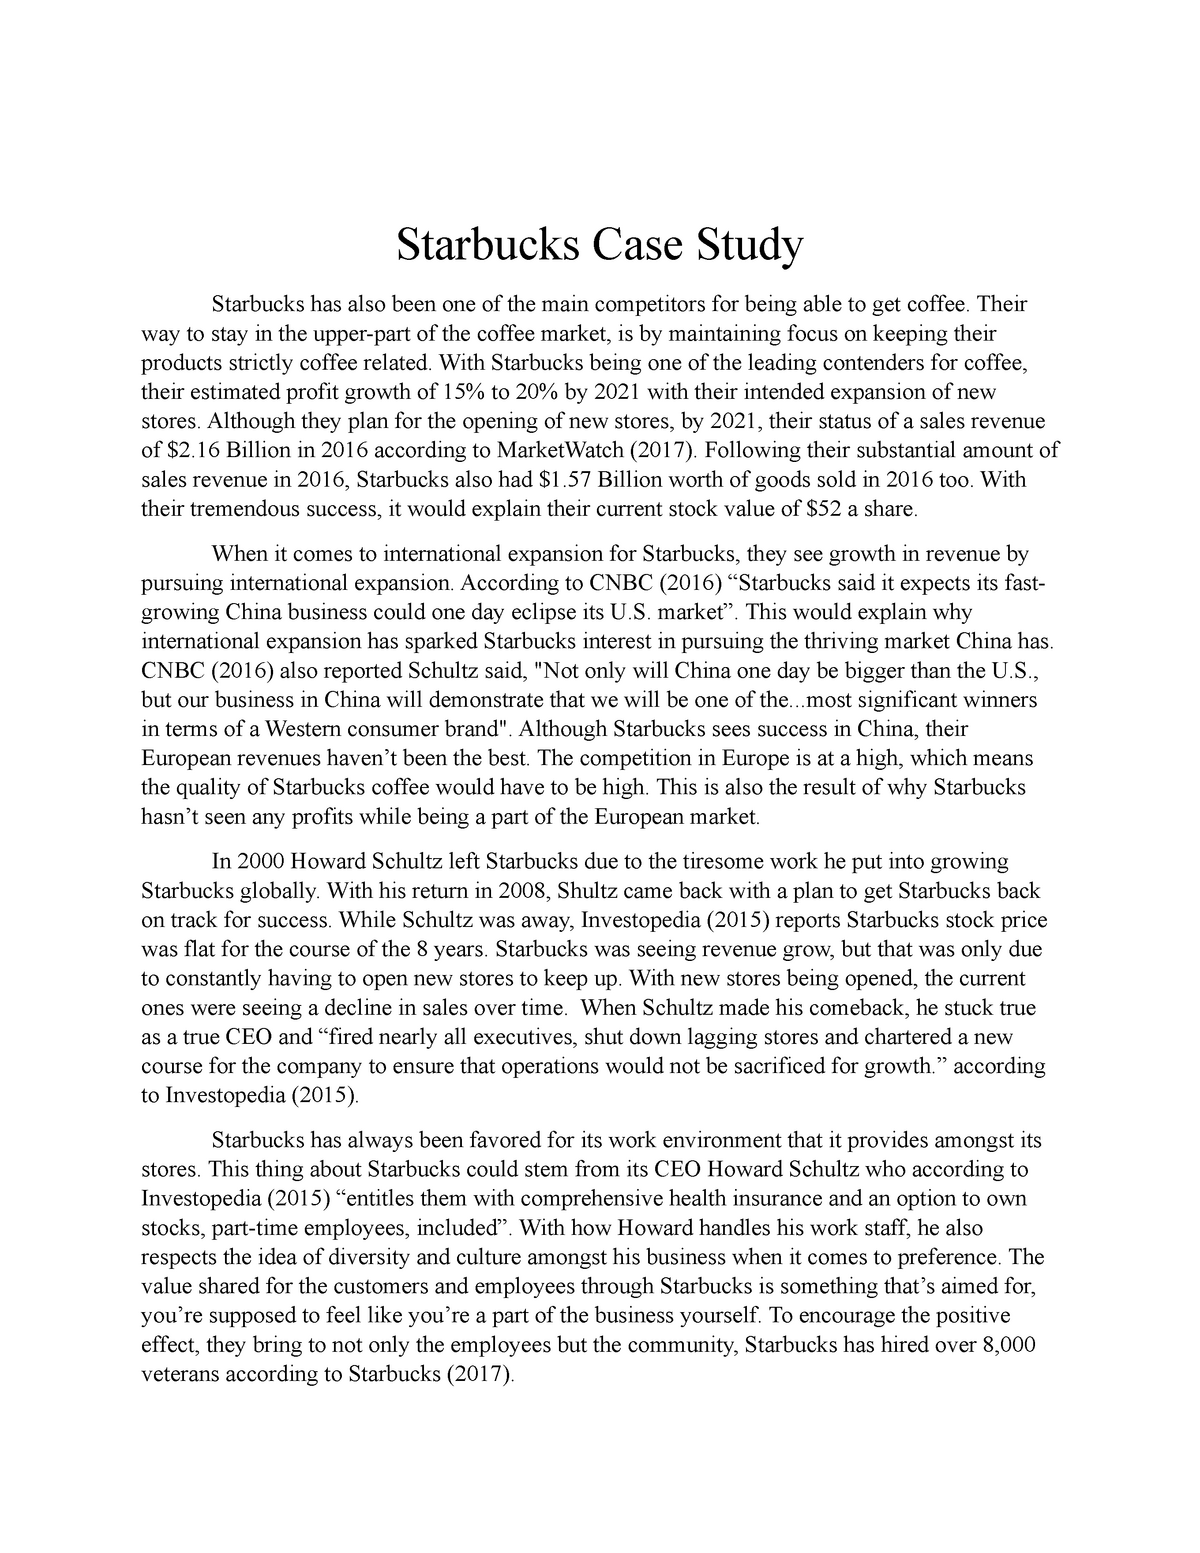 starbucks case study questions